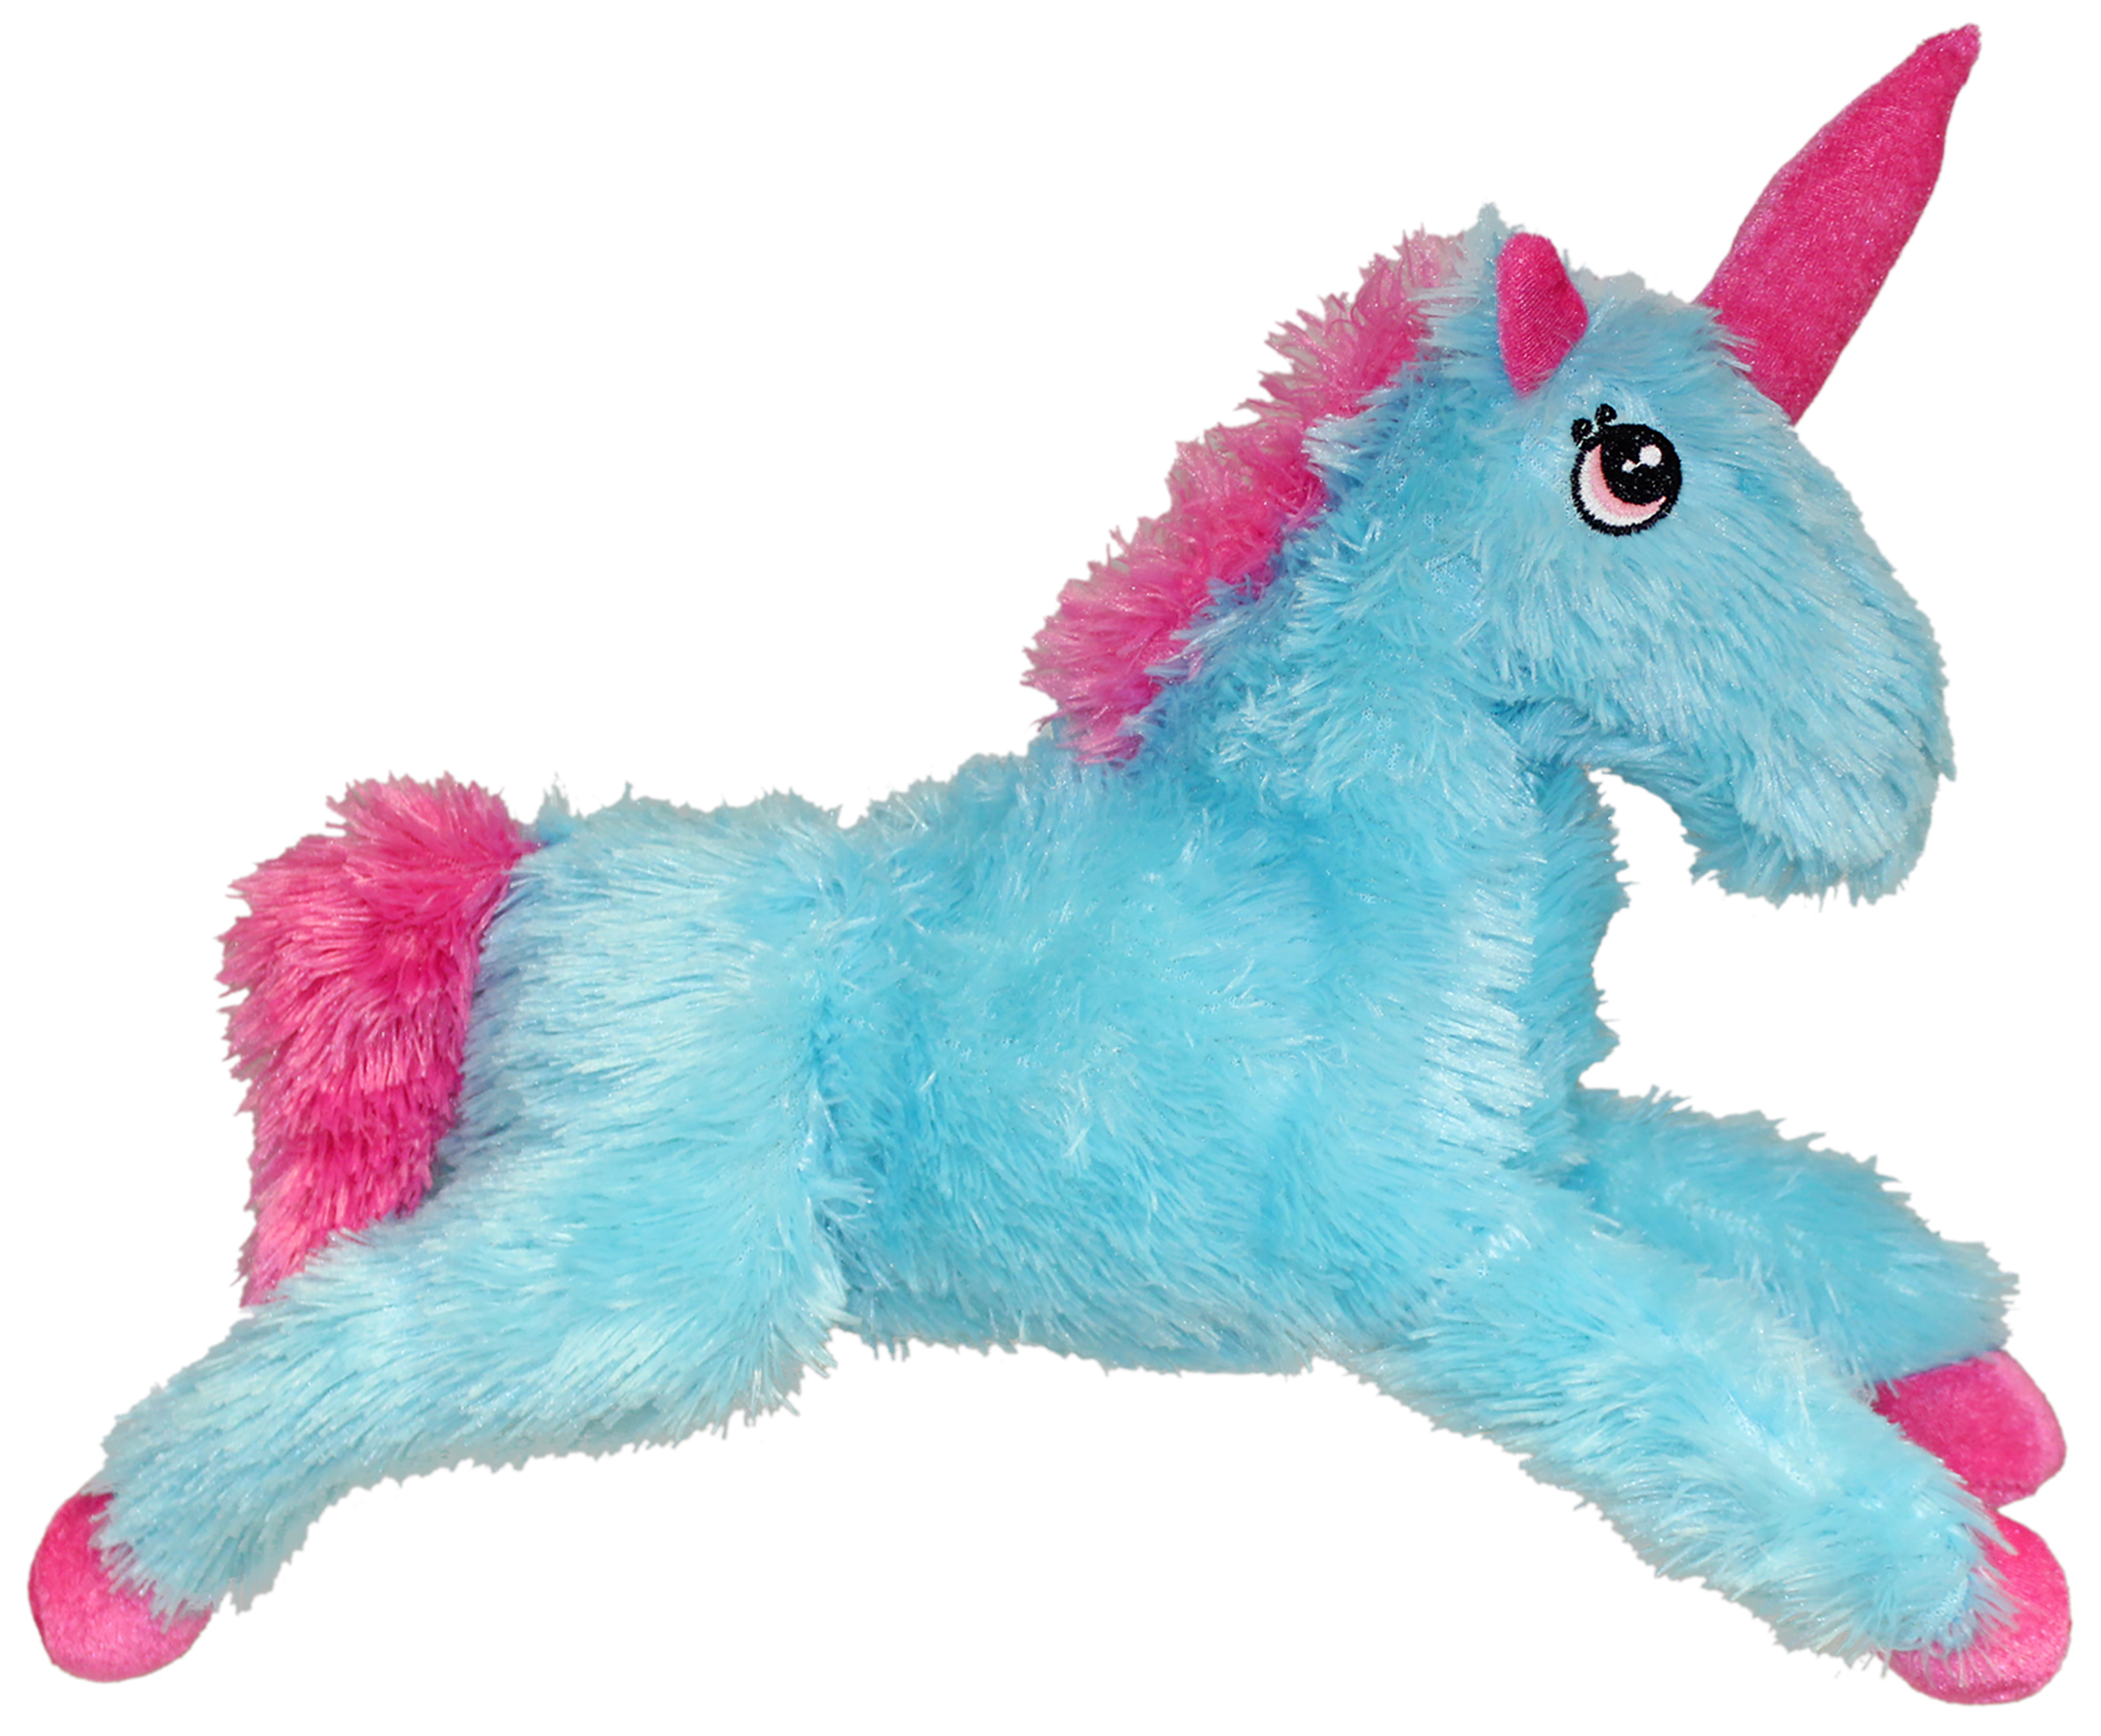 Plush Pal 22" Soft & Fluffy Blue Unicorn Stuffed Animal Toy - image 1 of 7